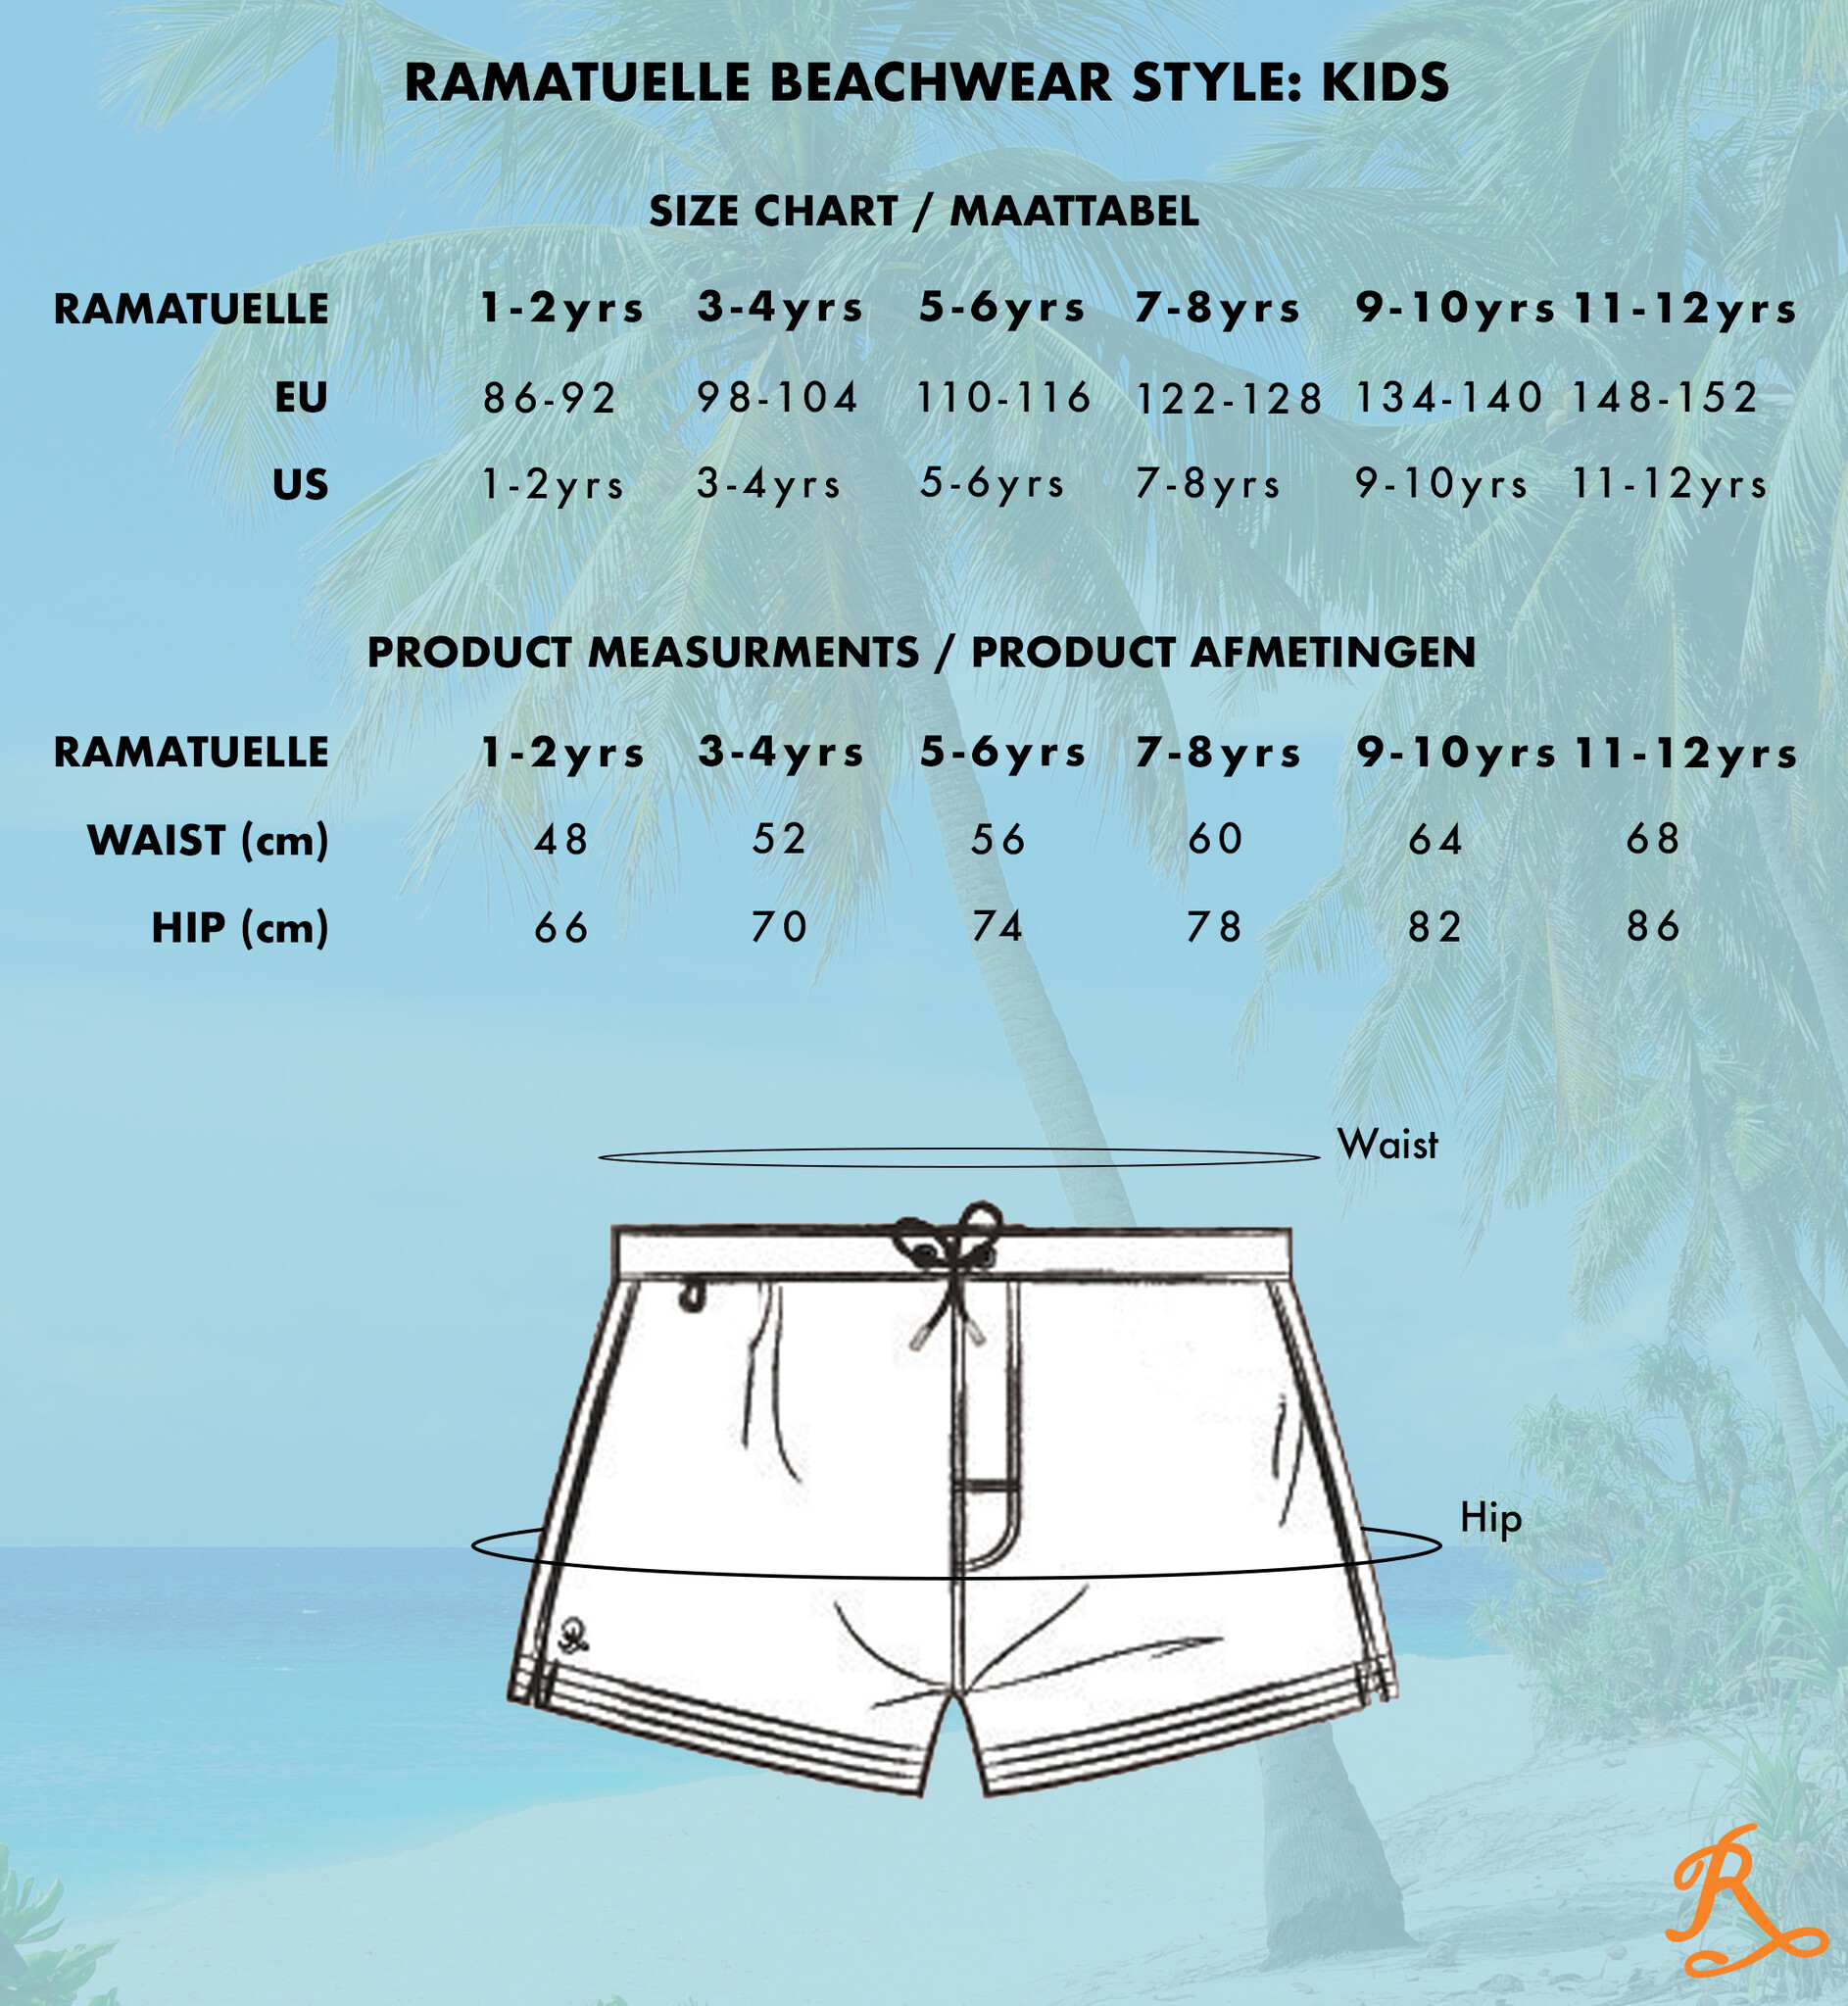 Size chart - Ramatuelle Beachwear